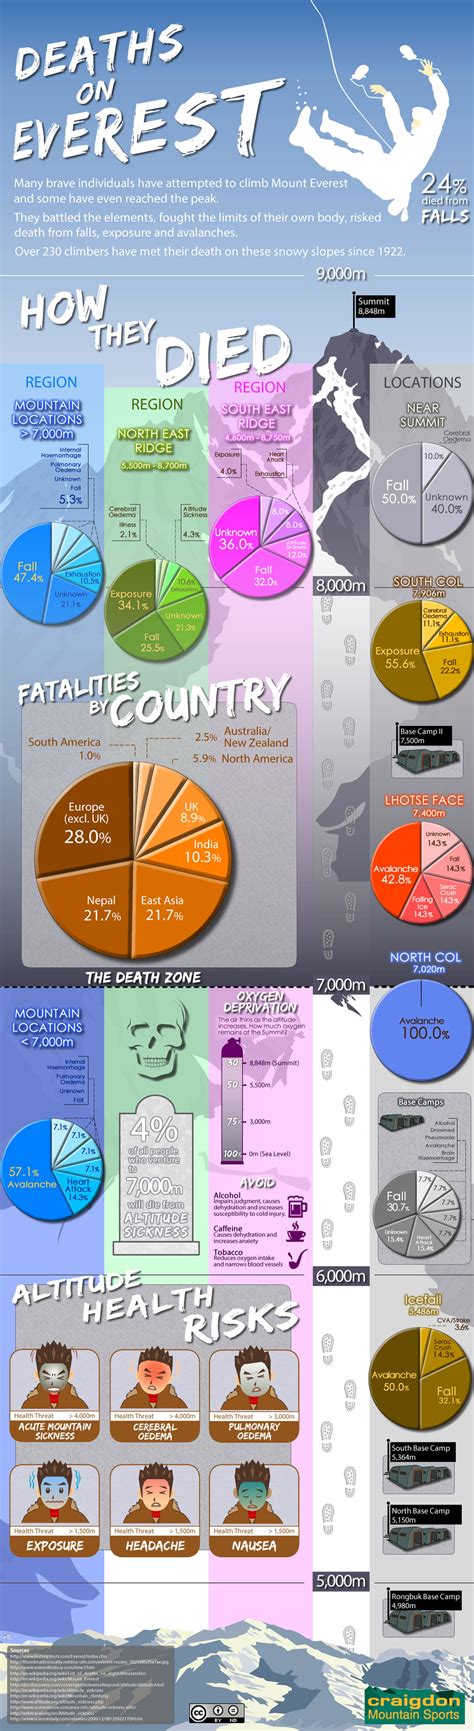 deaths on everest visual ly